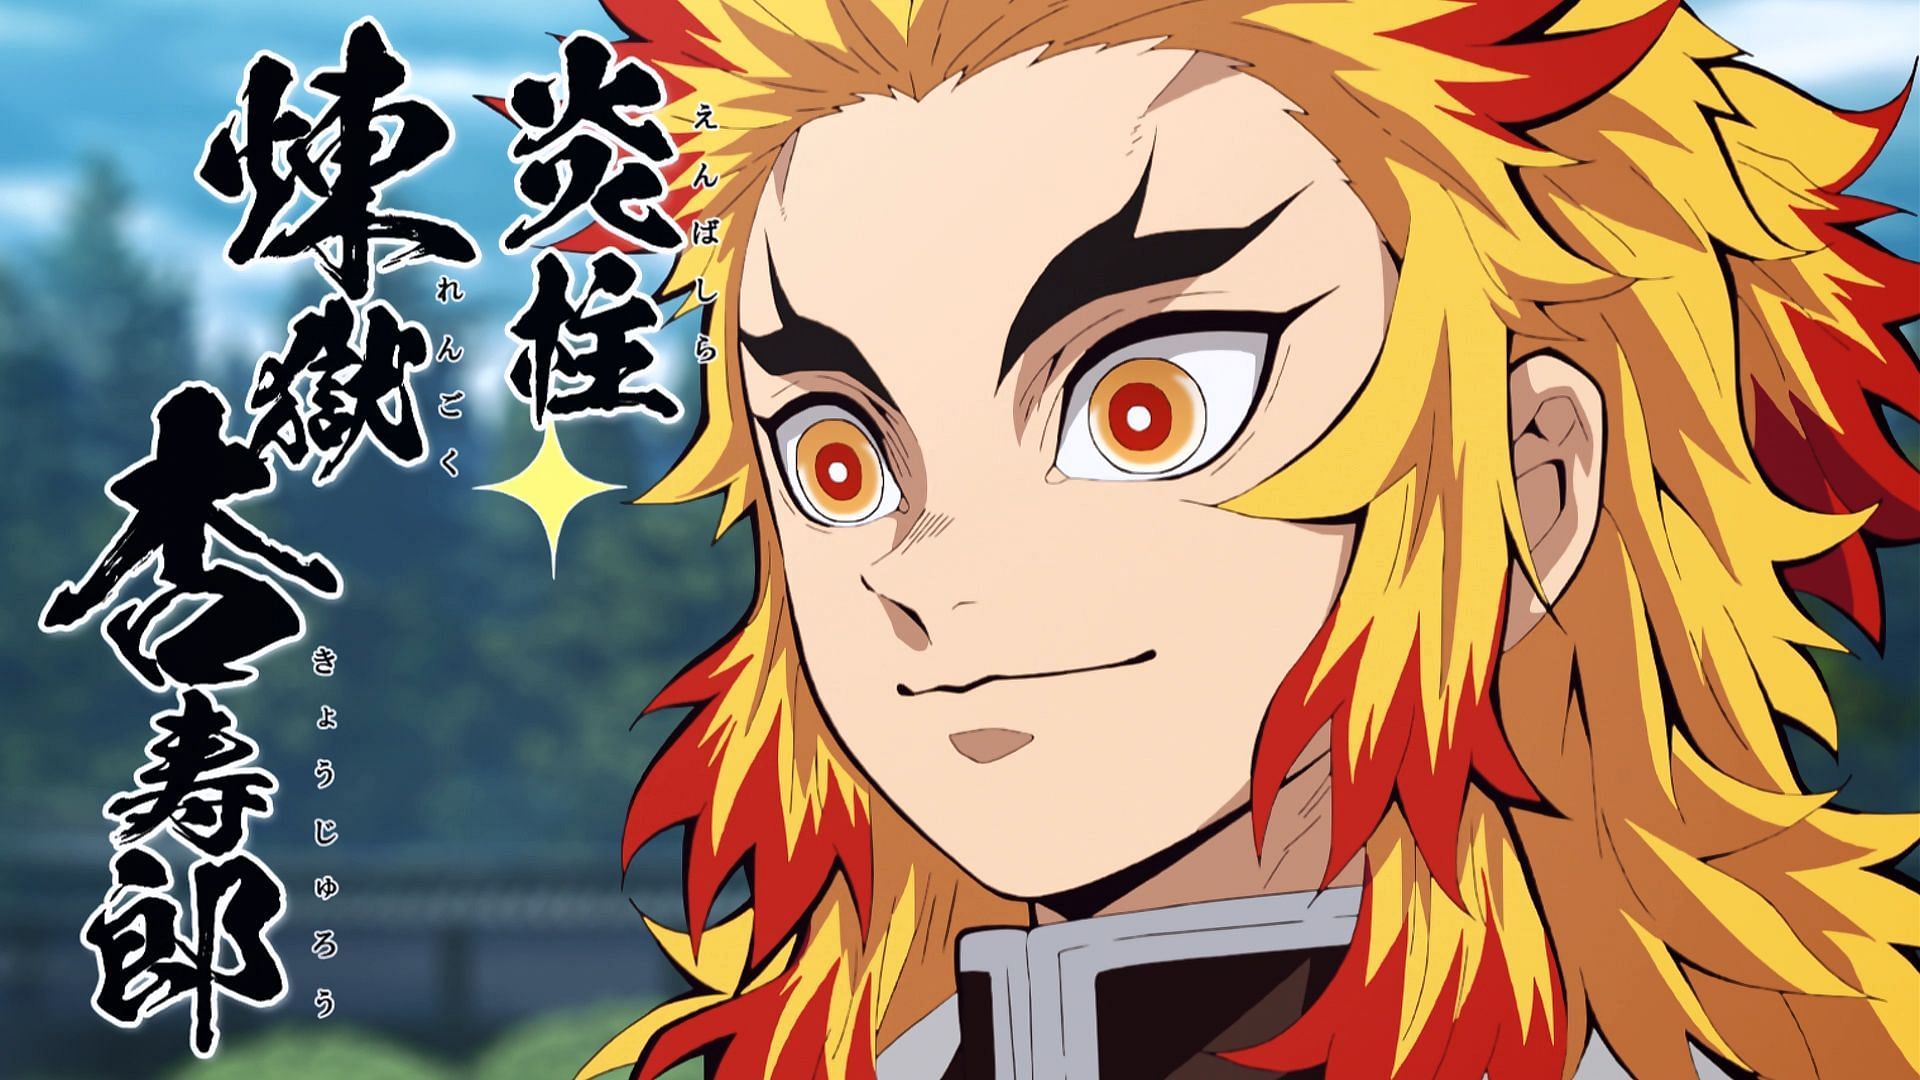 Rengoku as seen in the anime series (Image via Ufotable)